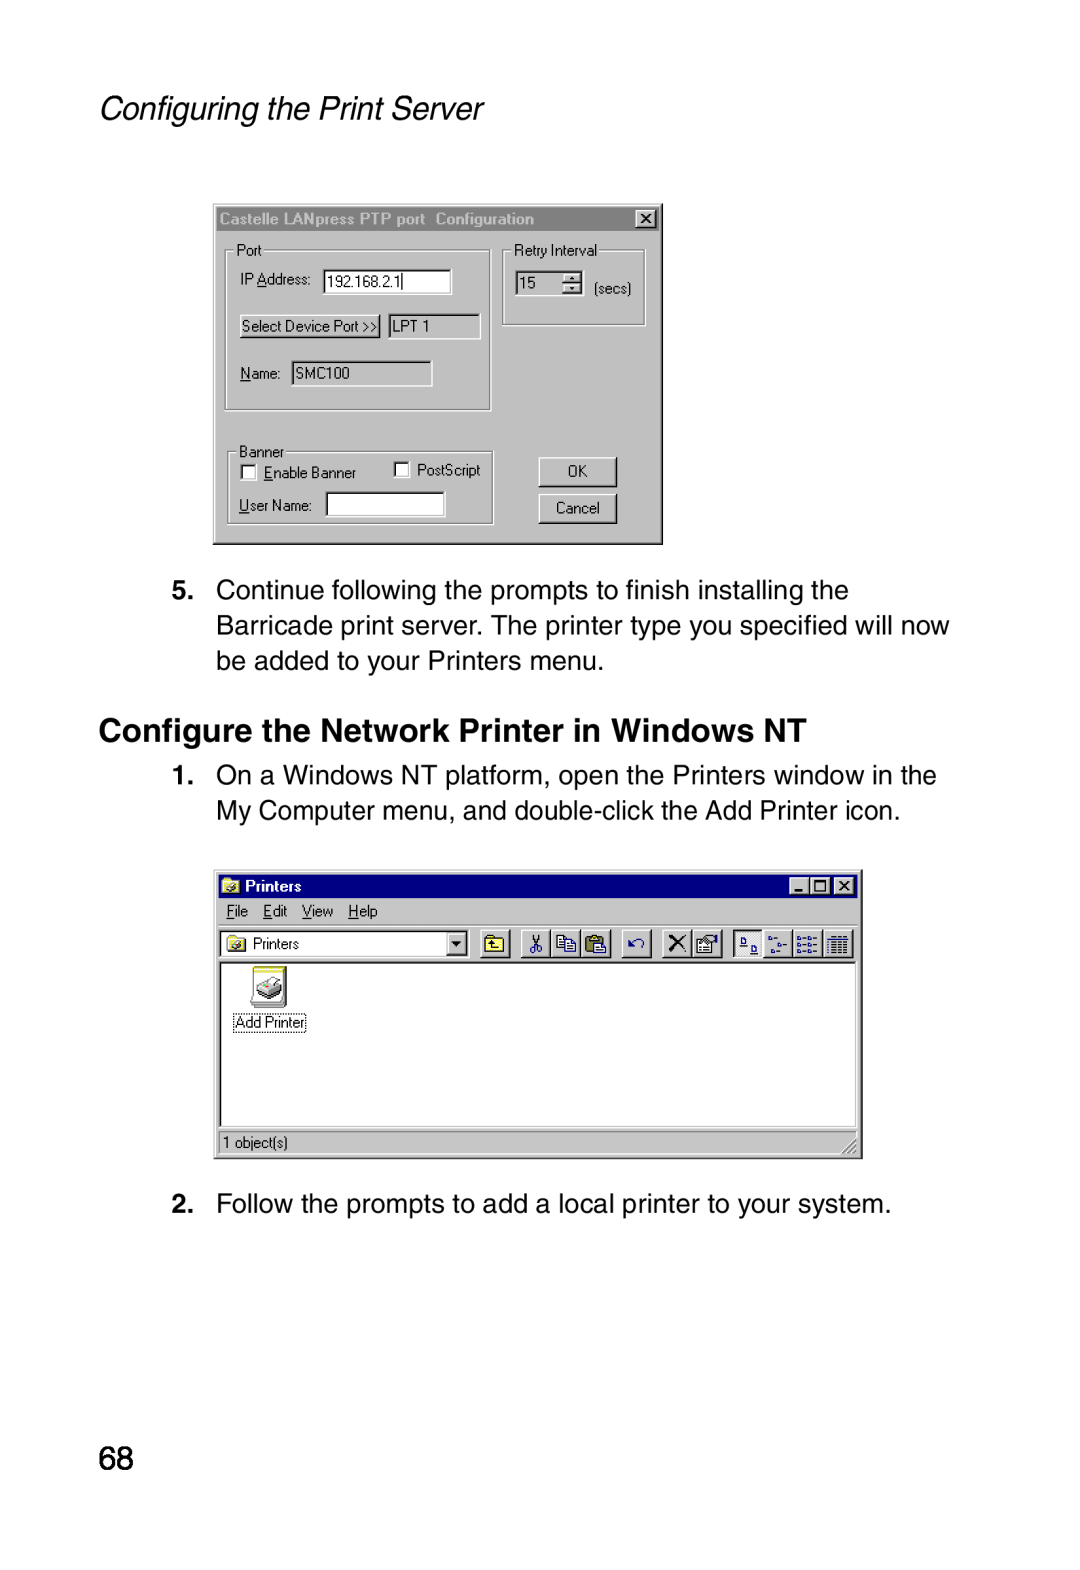 Sharp SMC7004ABR, S M C 7 0 0 4 A B R manual Configure the Network Printer in Windows NT, Configuring the Print Server 